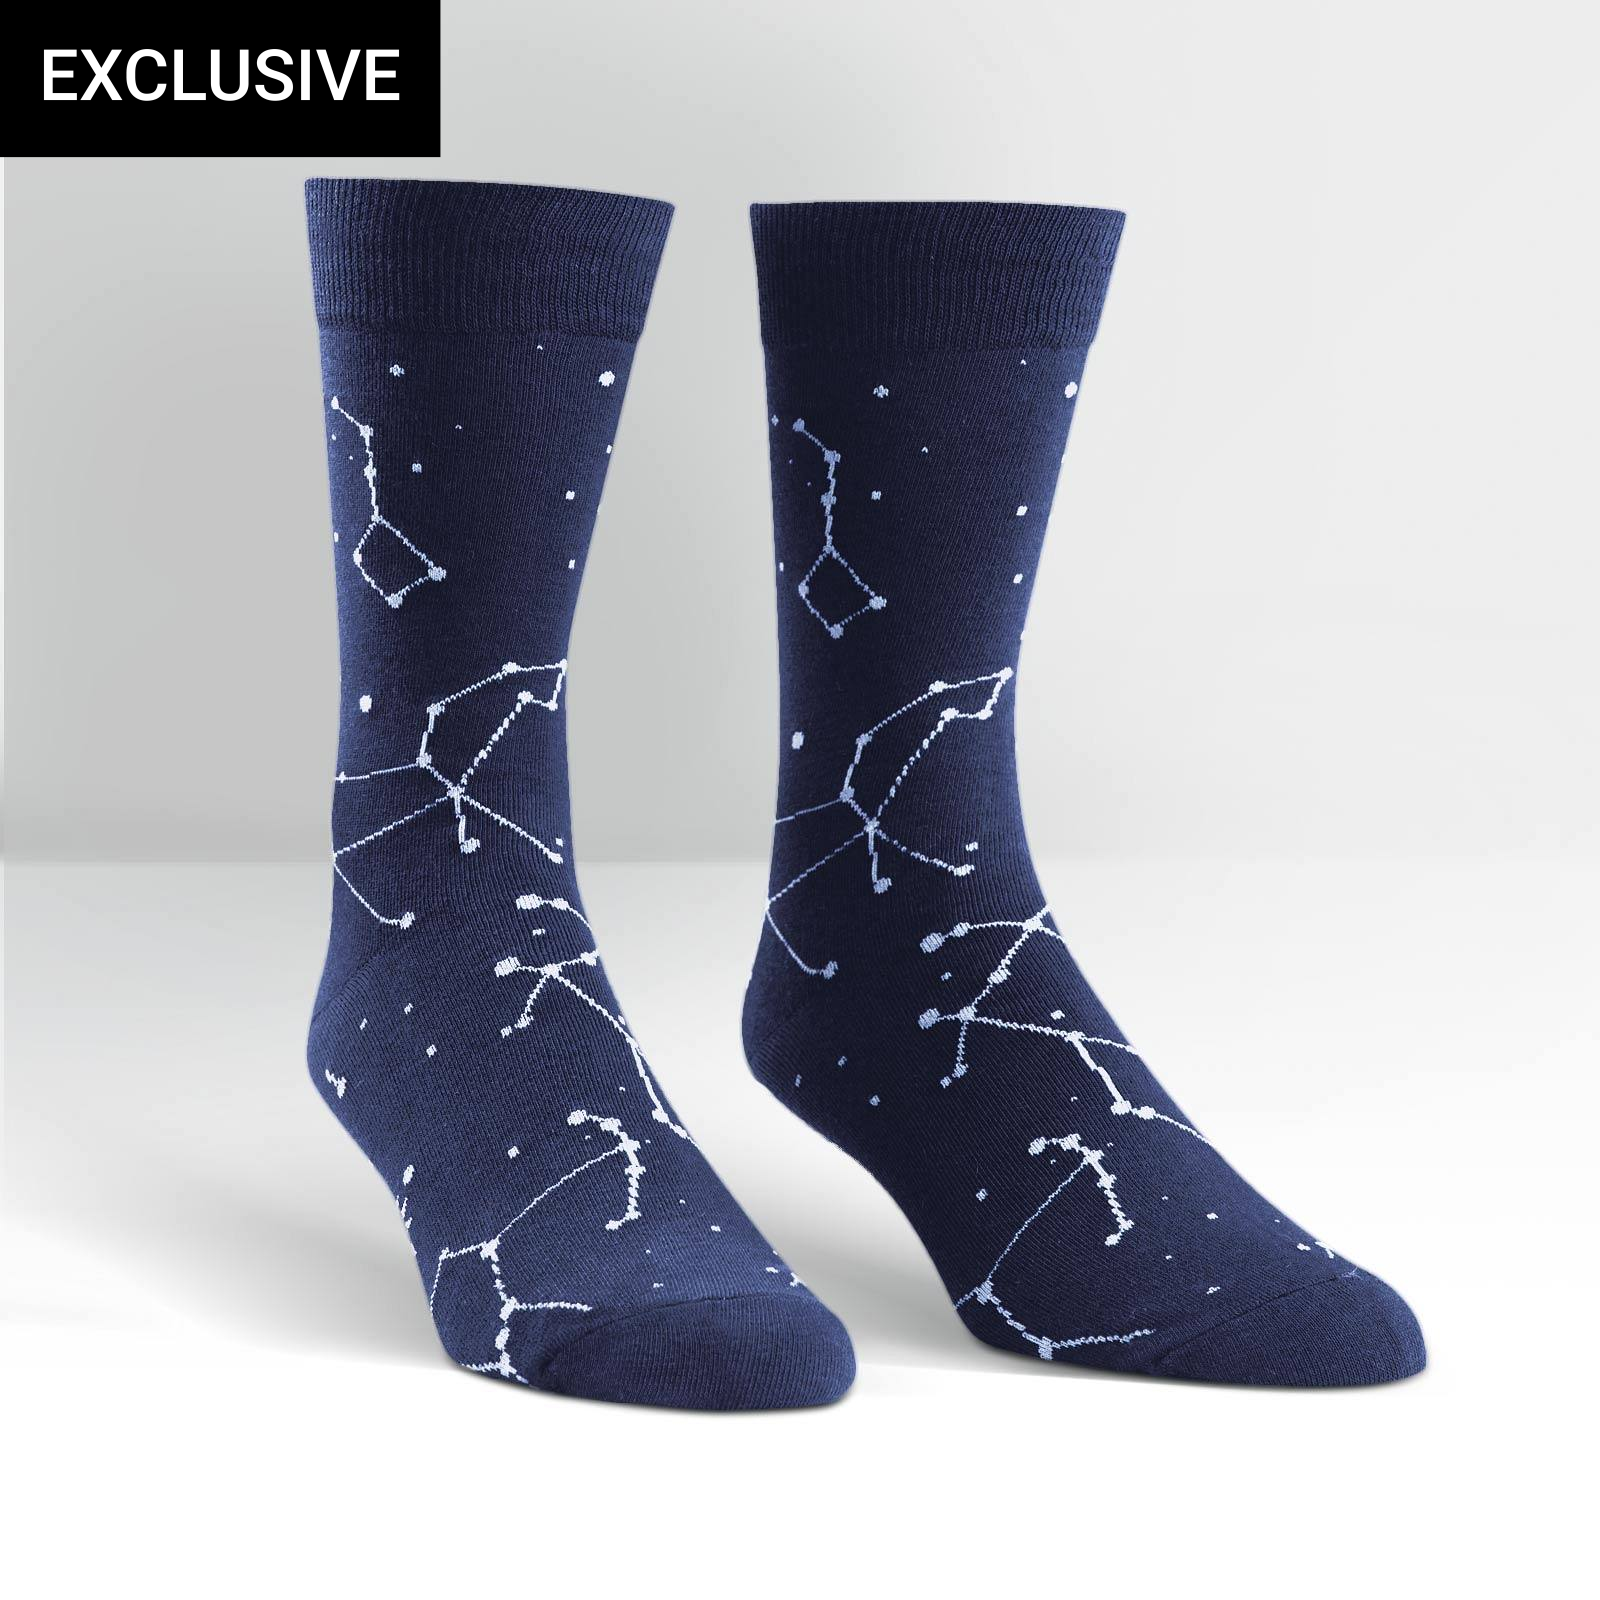 Constellations Glow-in-the-dark Crew Socks